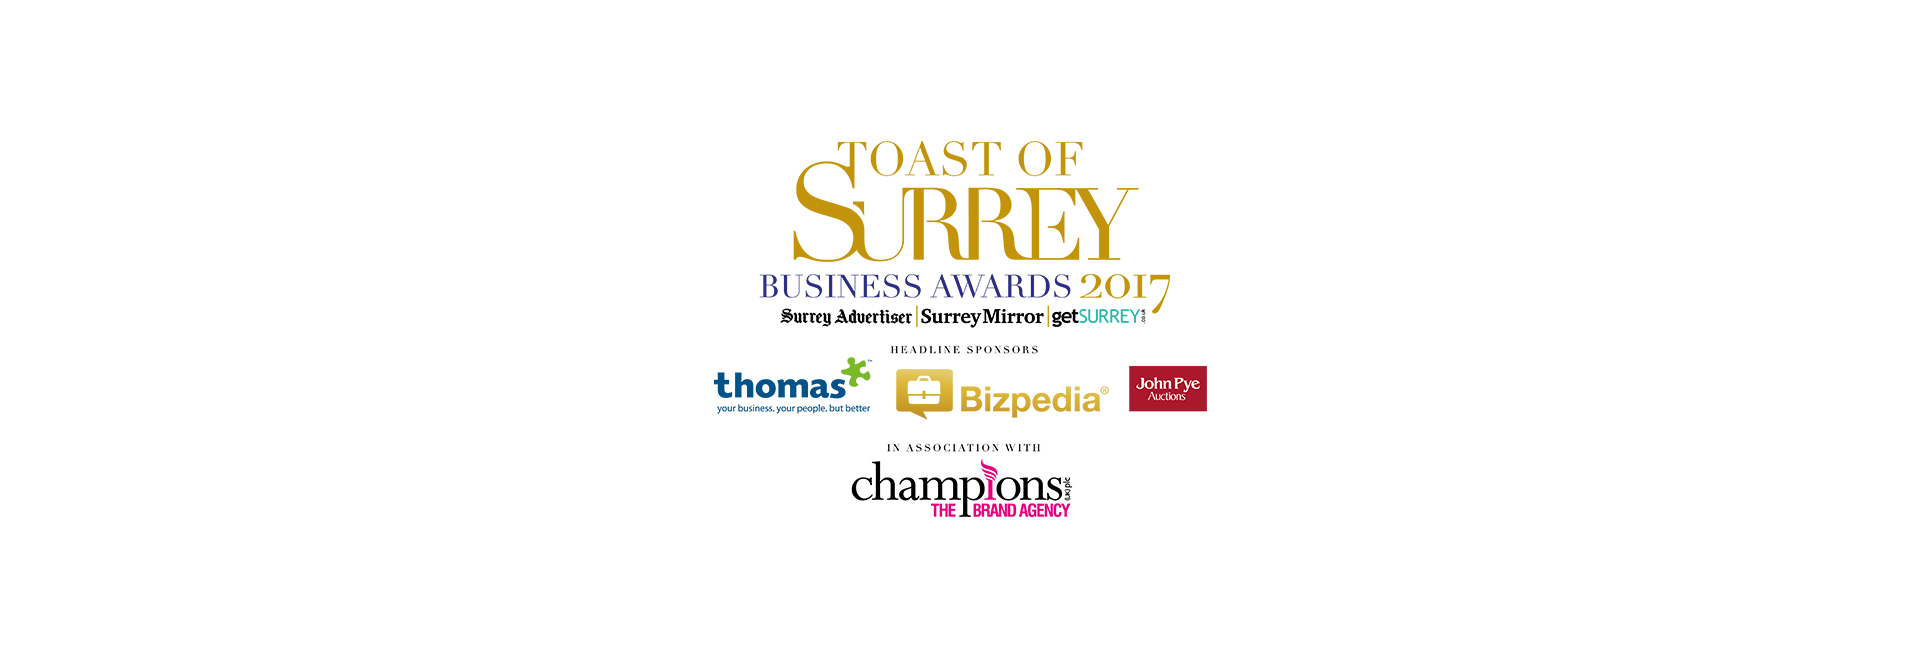 Toast of Surrey Marketing Award